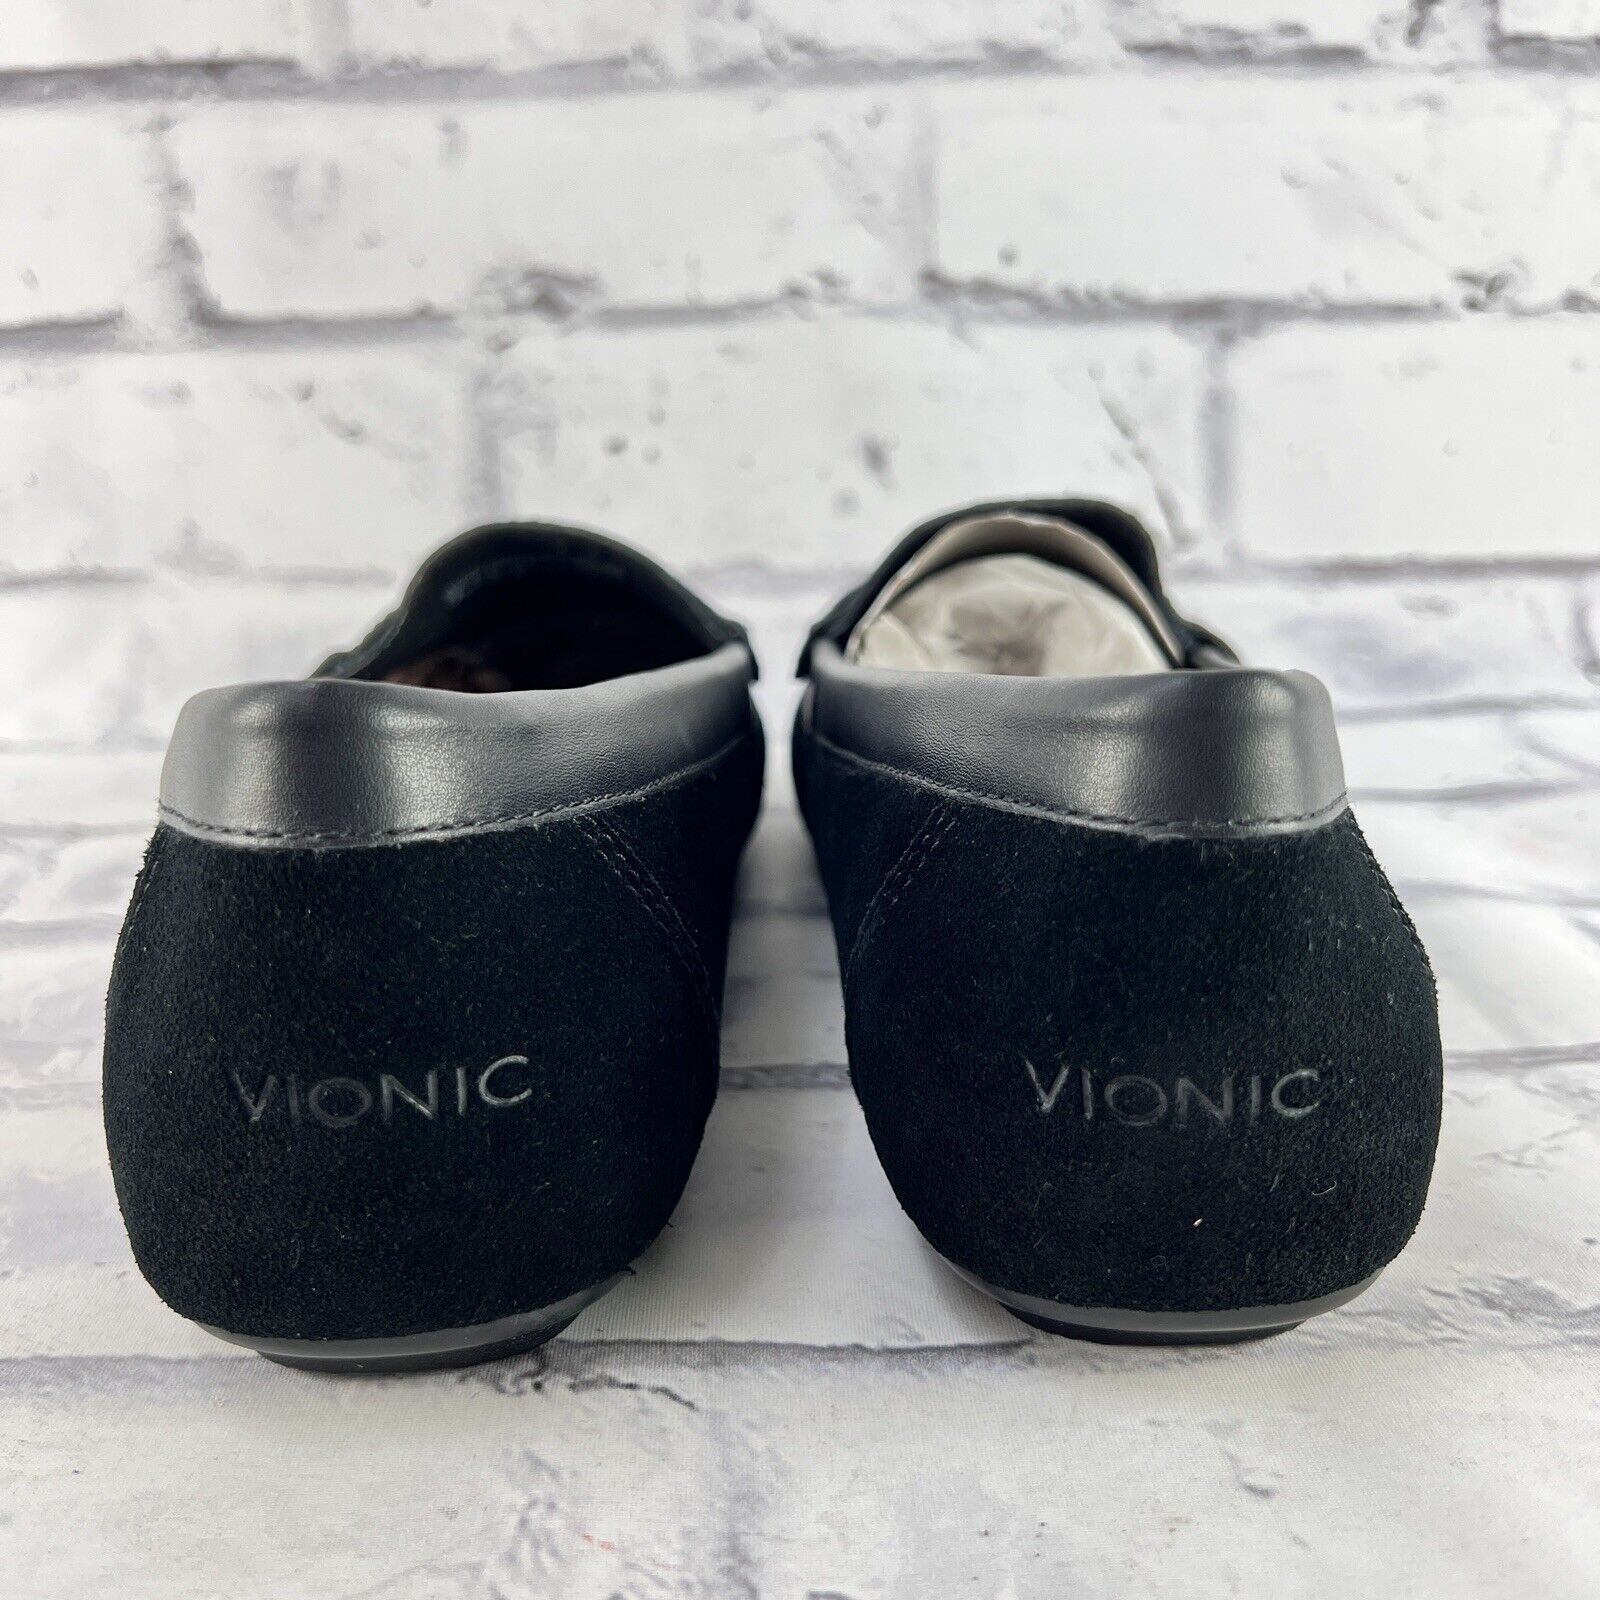 Vionic Honor Hilo Womens Size 9 Orthopedic Comfort Loafer Black Suede Flat Shoe